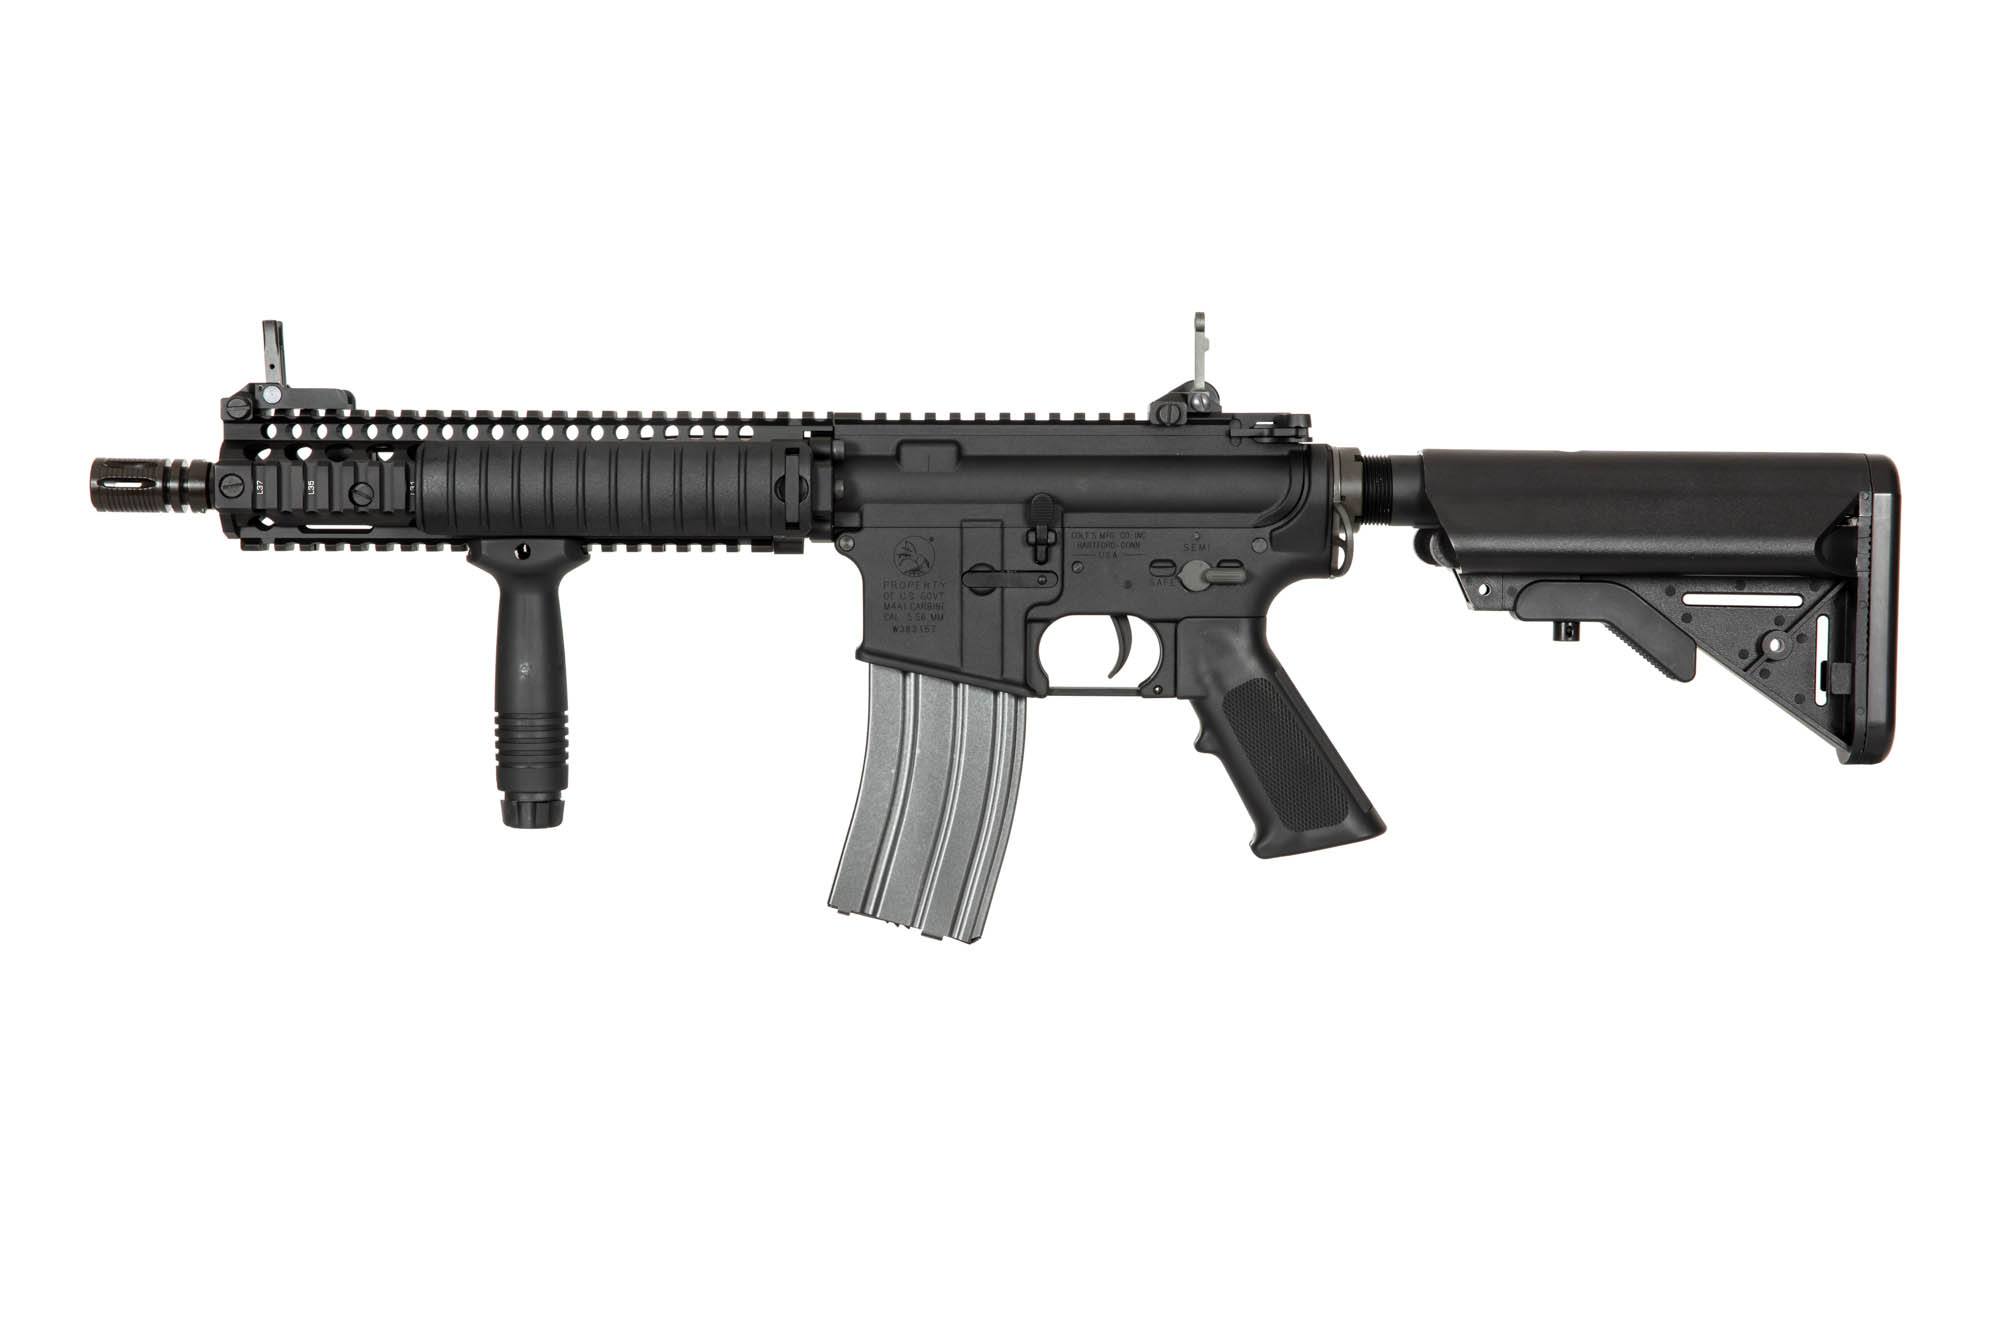 VF1-LMK18M1 (Colt MK18 MOD 1) Carbine Replica - black